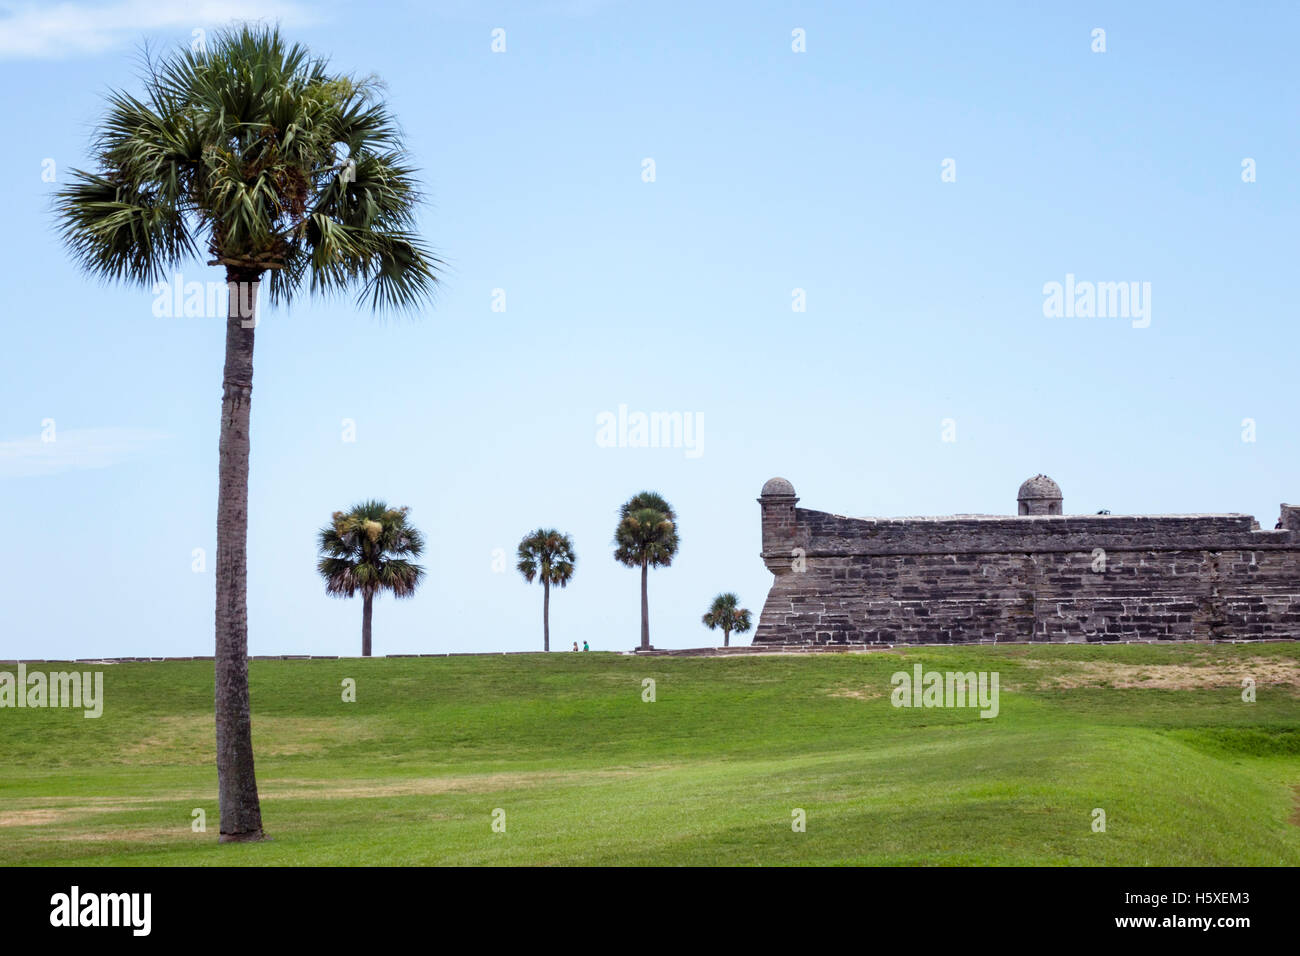 St. Saint Augustine Florida,Castillo de San Marcos National Monument,sentry post,wall,palm trees,historic fort,FL160802028 Stock Photo